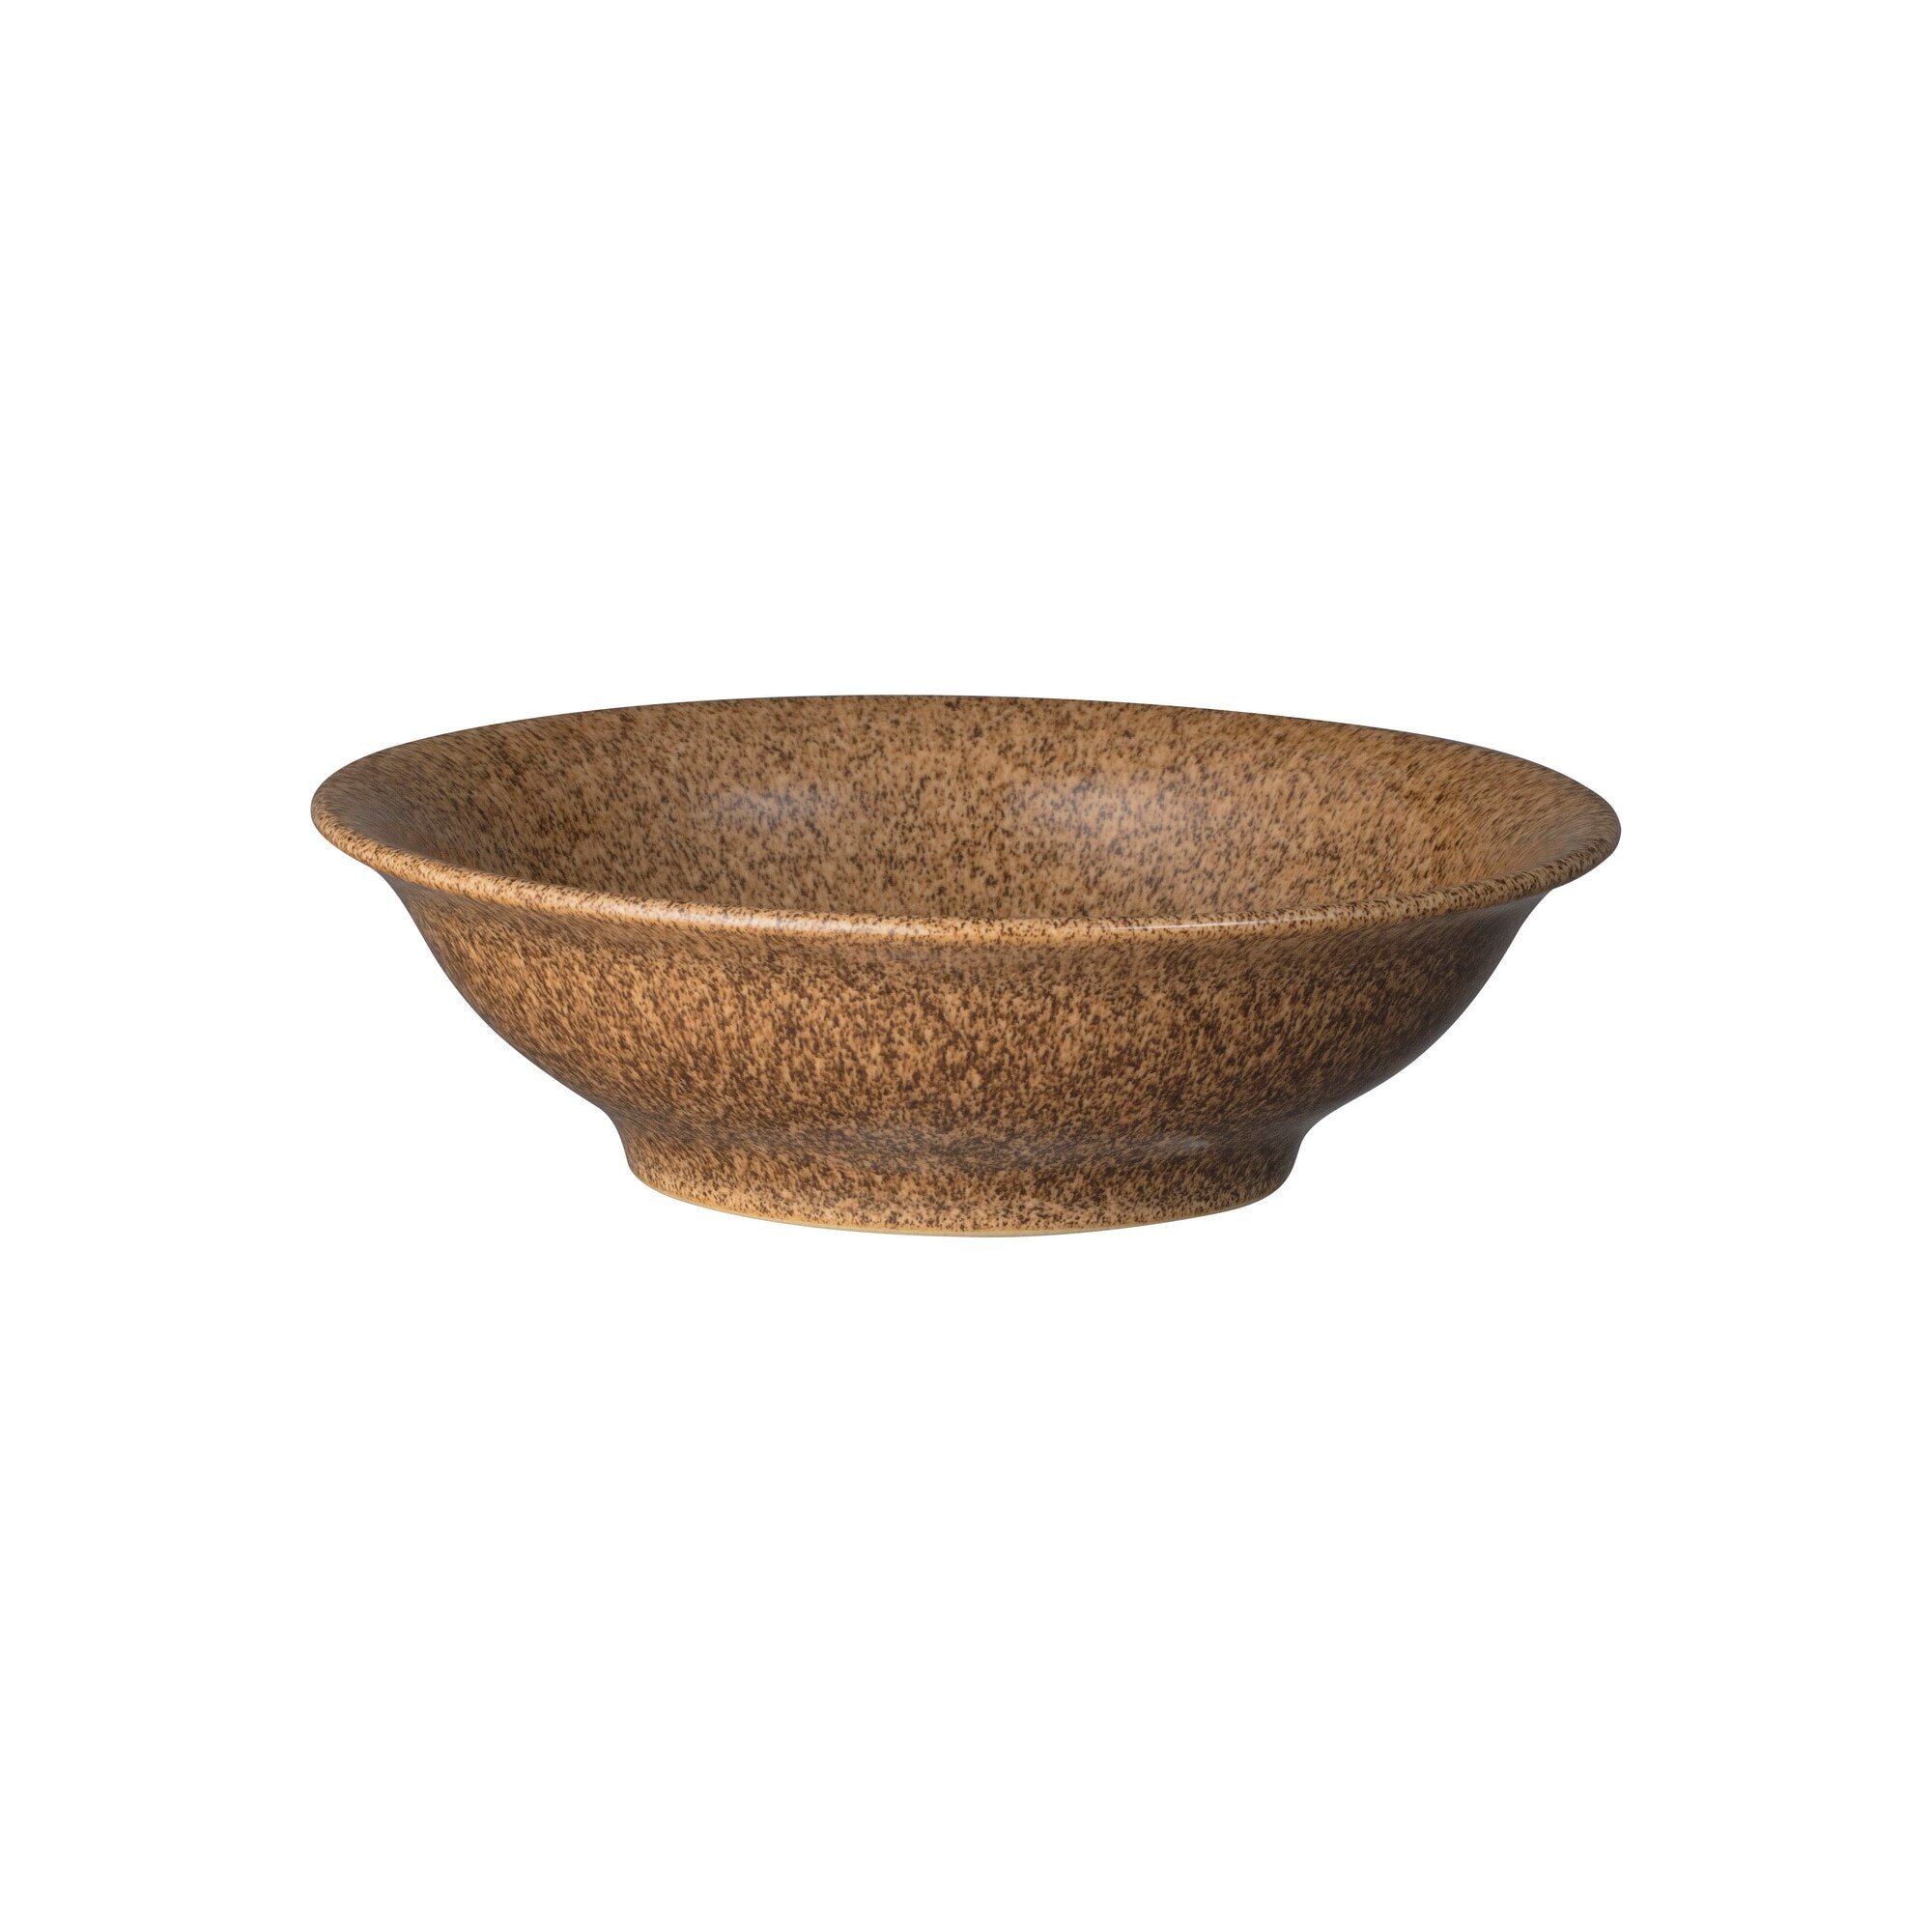 Studio Craft Chestnut Small Shallow Bowl